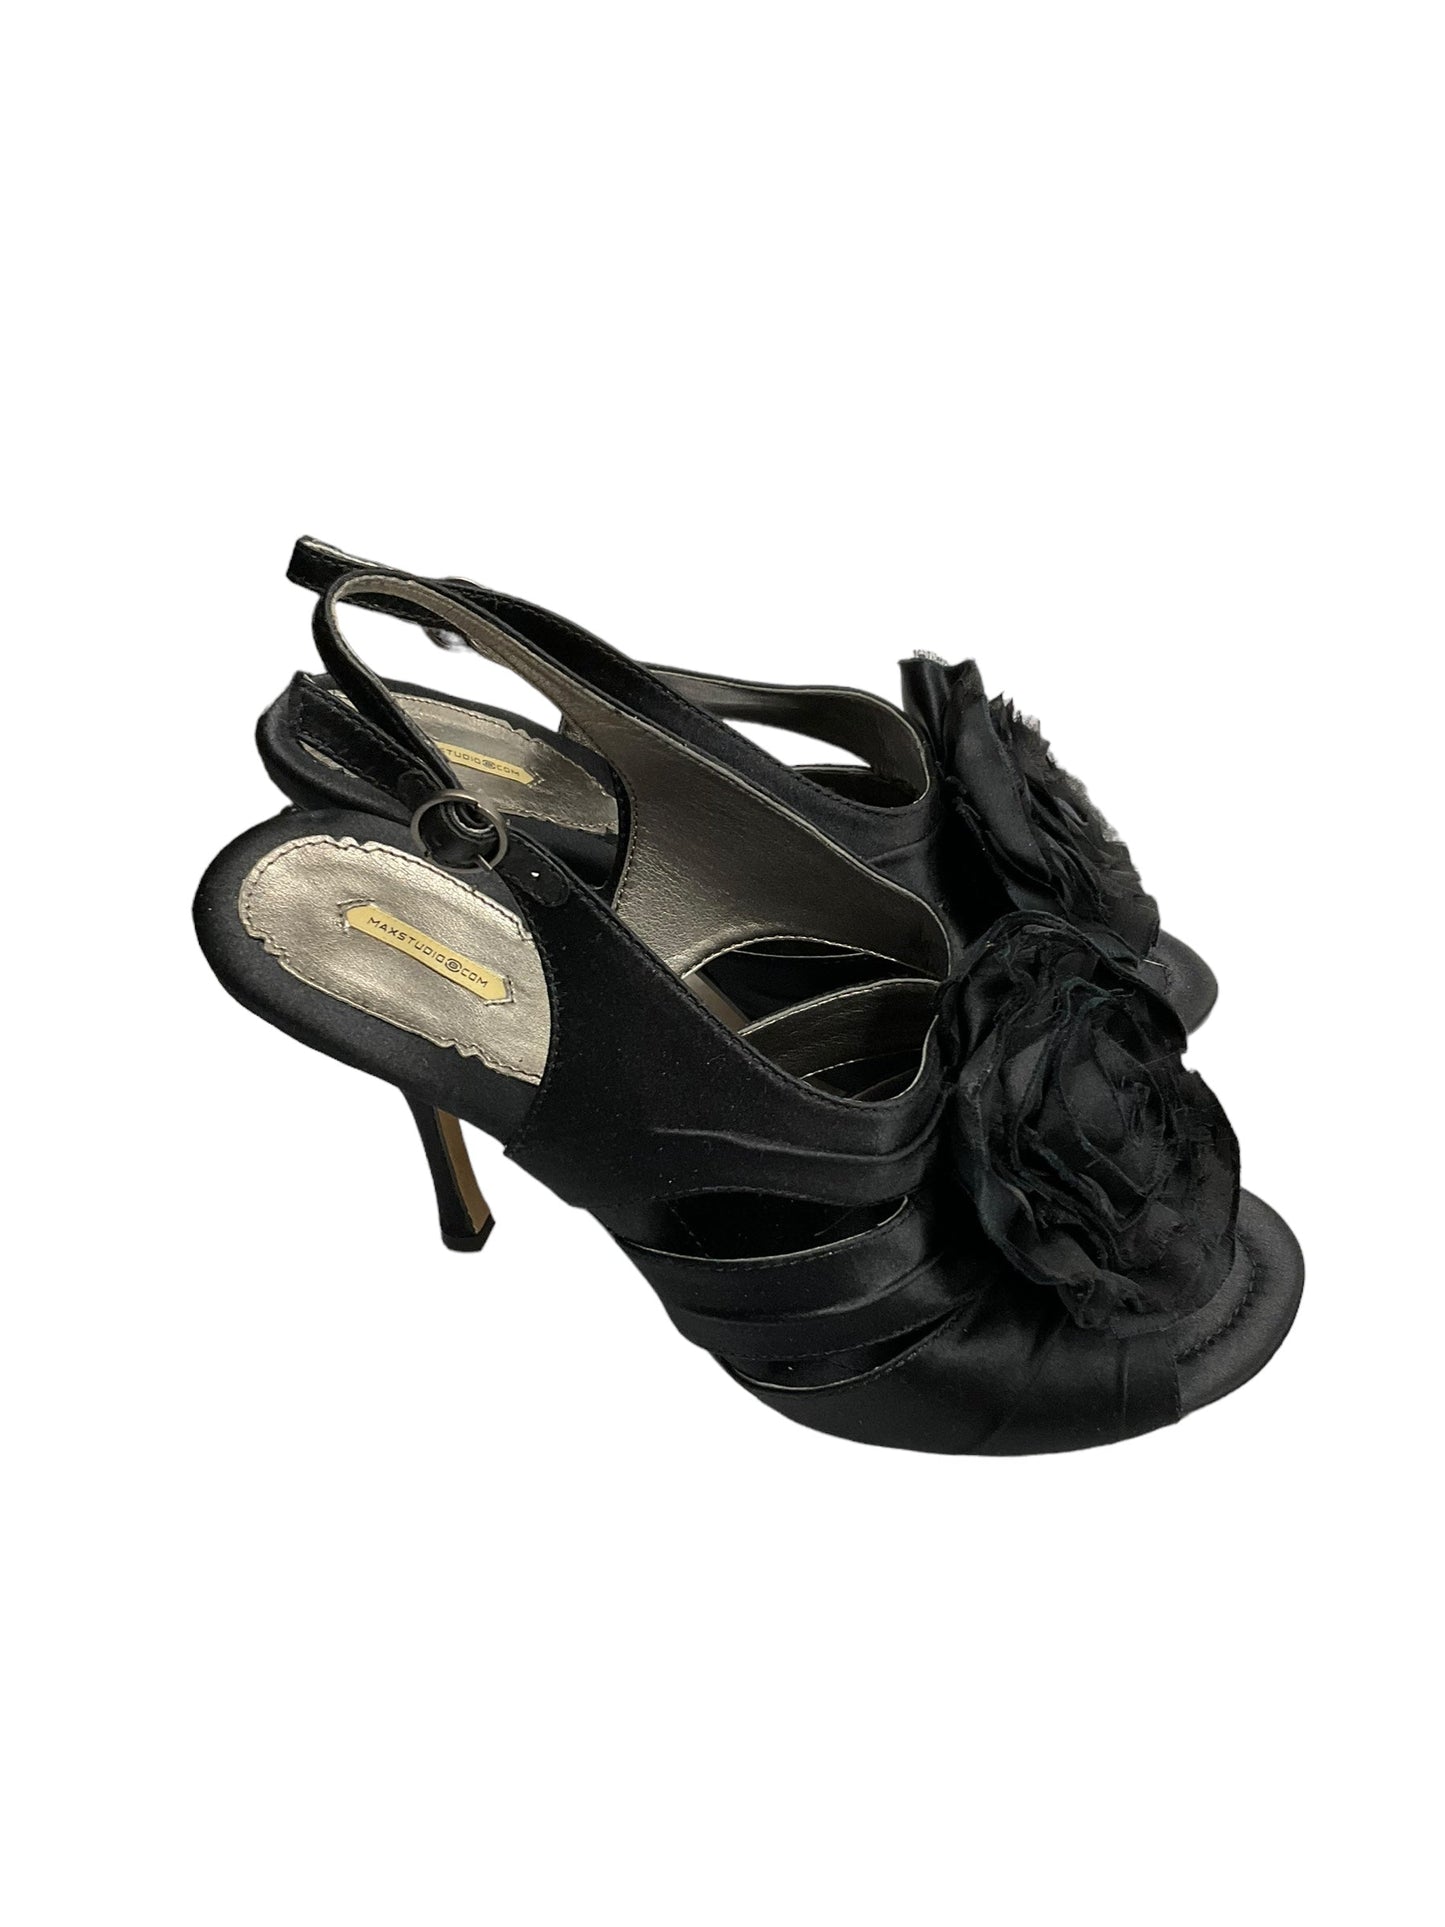 Black Shoes Heels Stiletto Max Studio, Size 7.5